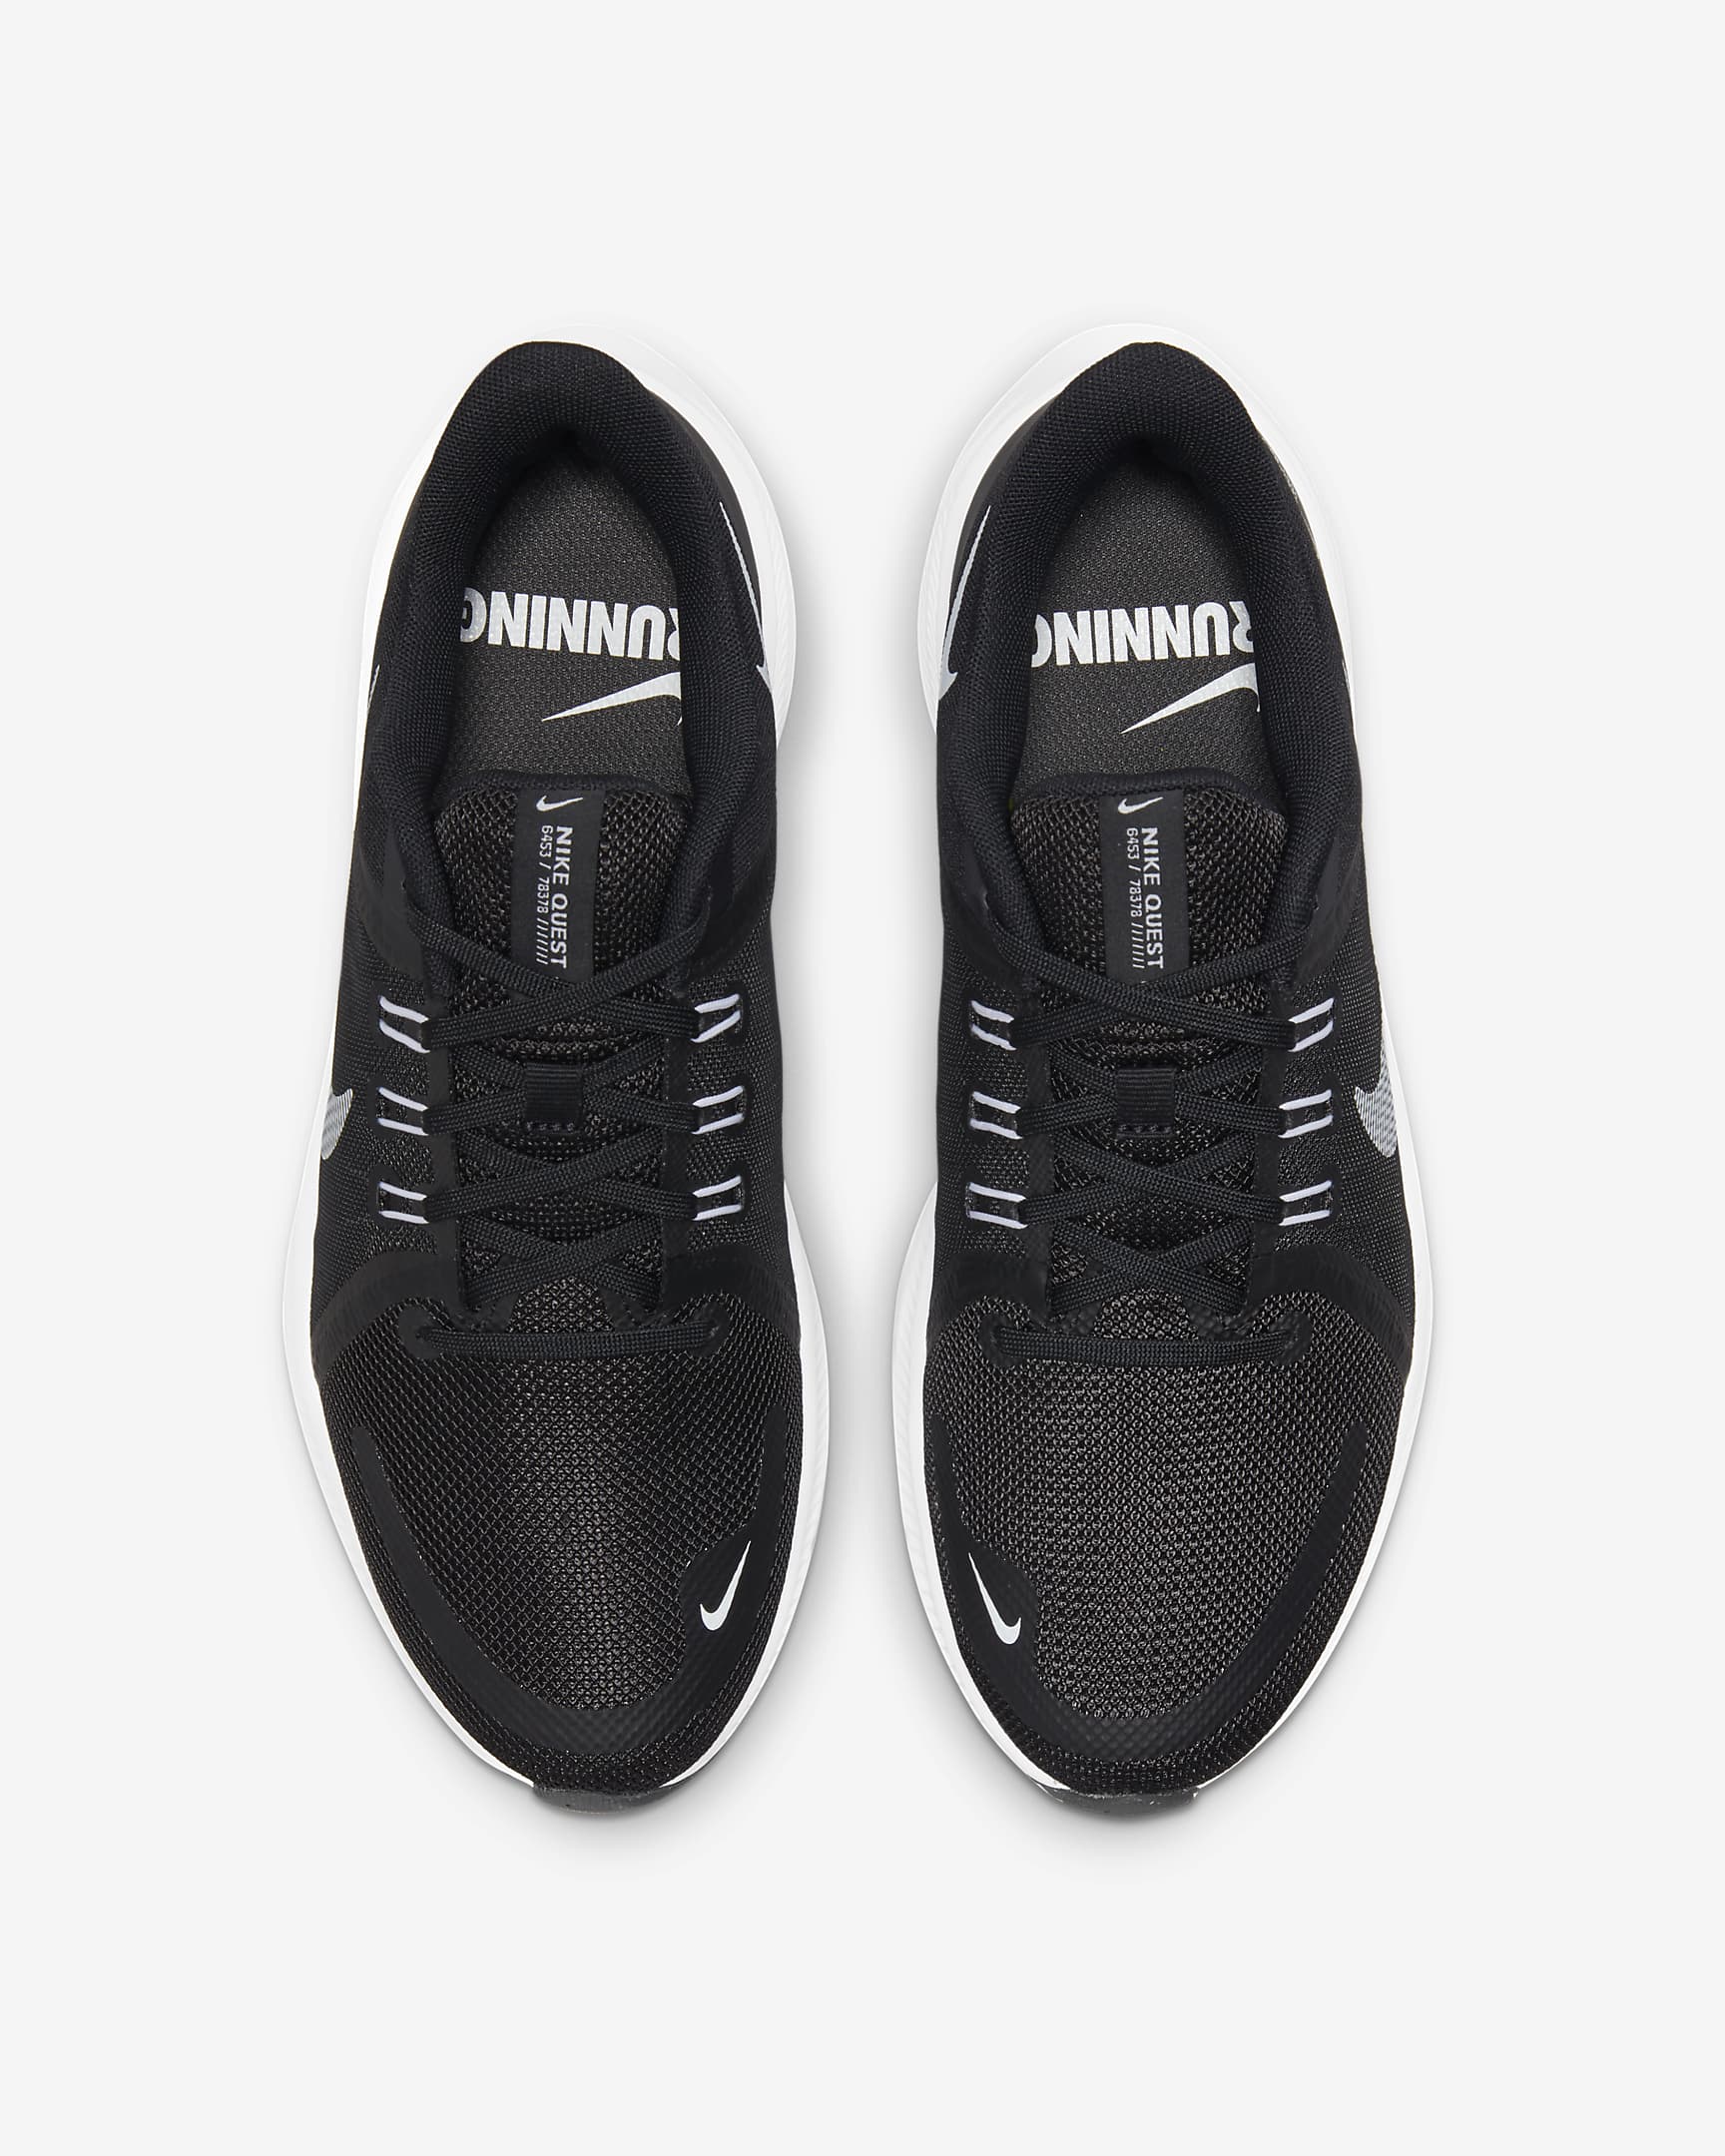 Nike Quest 4 Women's Road Running Shoes - Black/Dark Smoke Grey/White